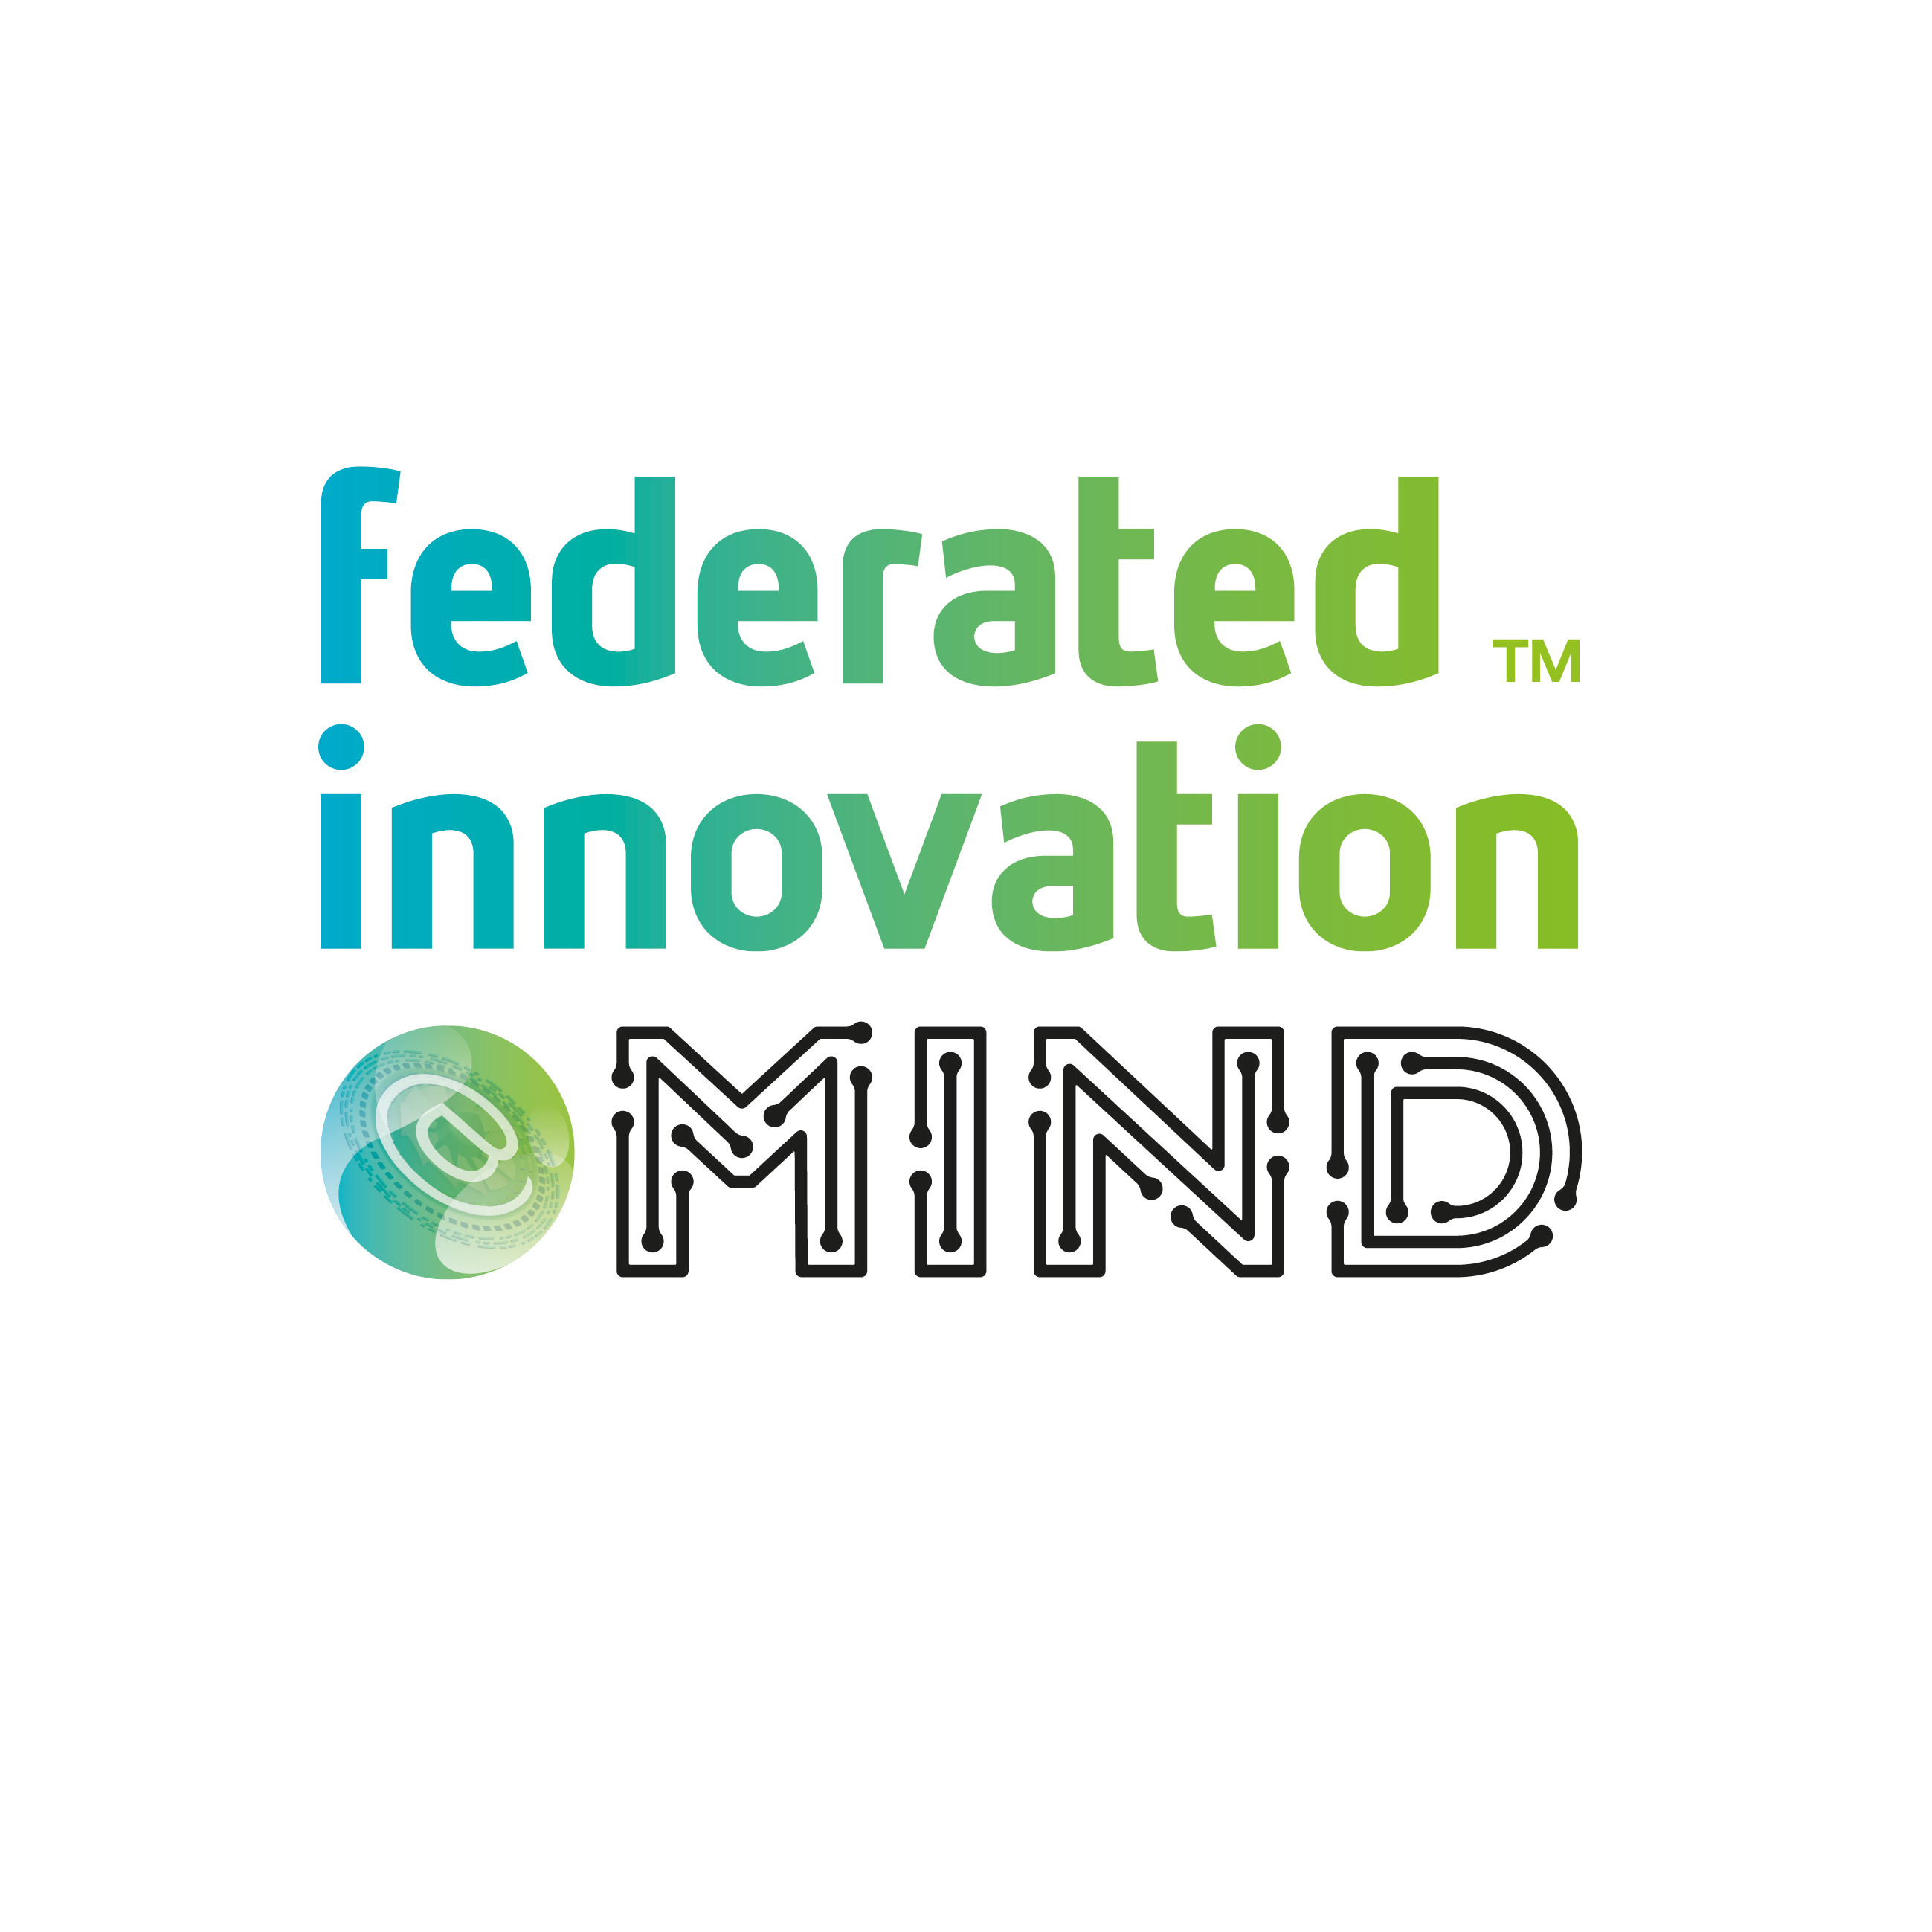 Federated Innovation @MIND